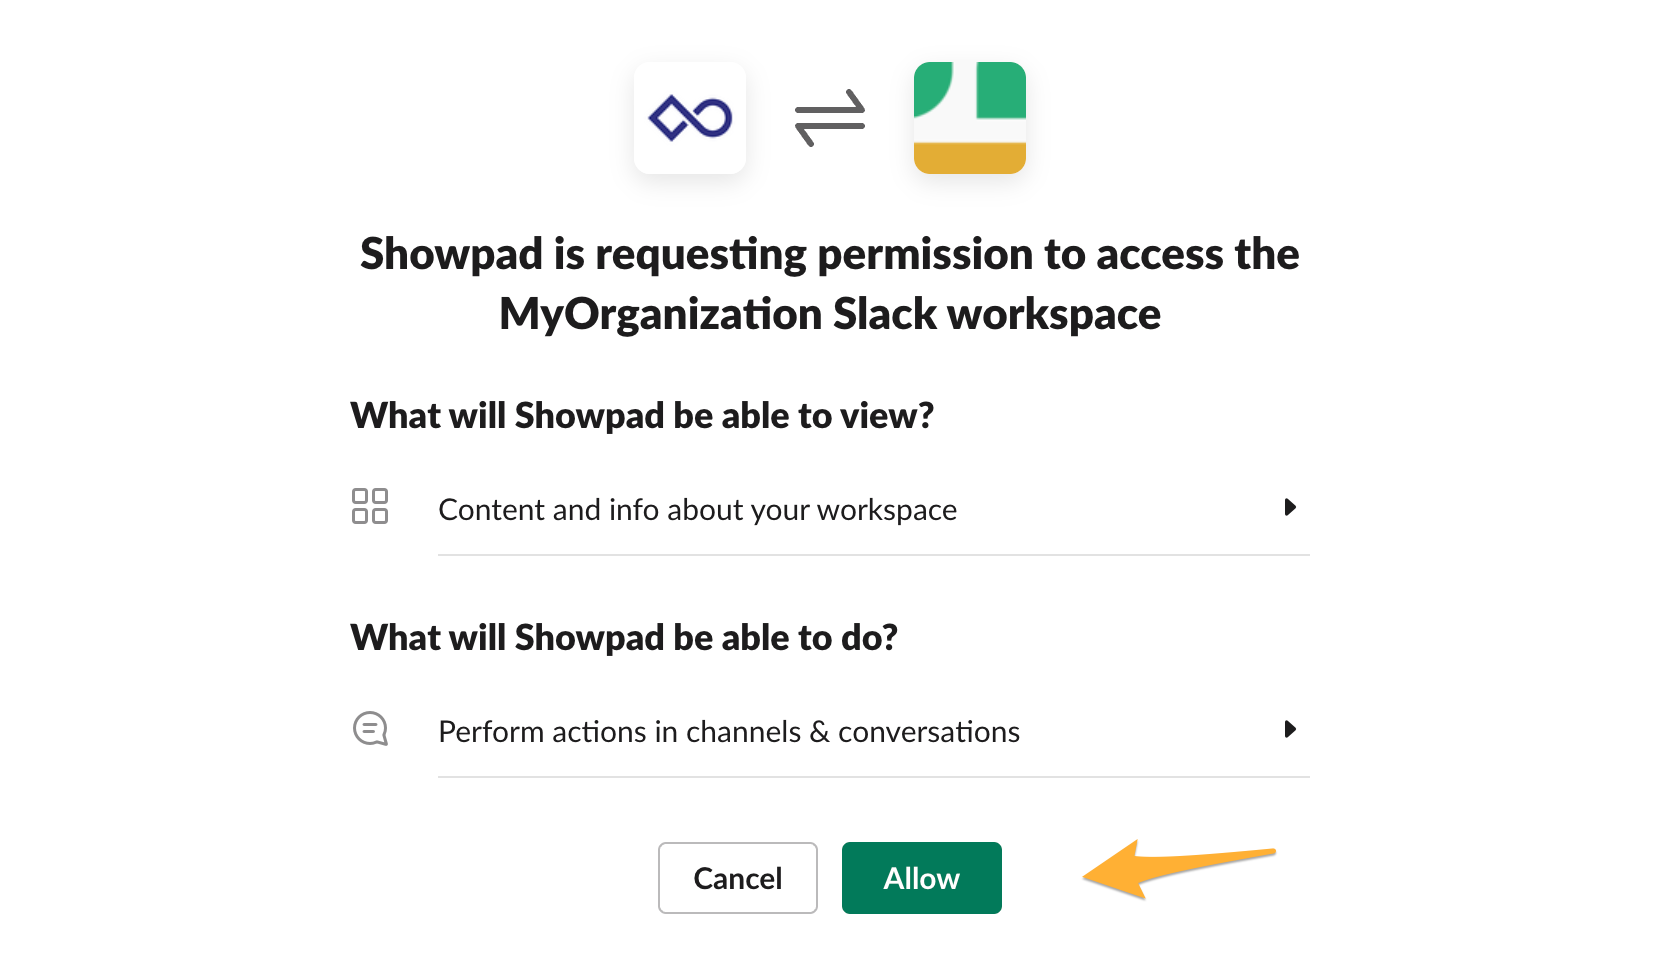 Showpad_is_requesting_permission_to_access_the_MyOrganization_Slack_workspace___MyOrganization_Slack.png